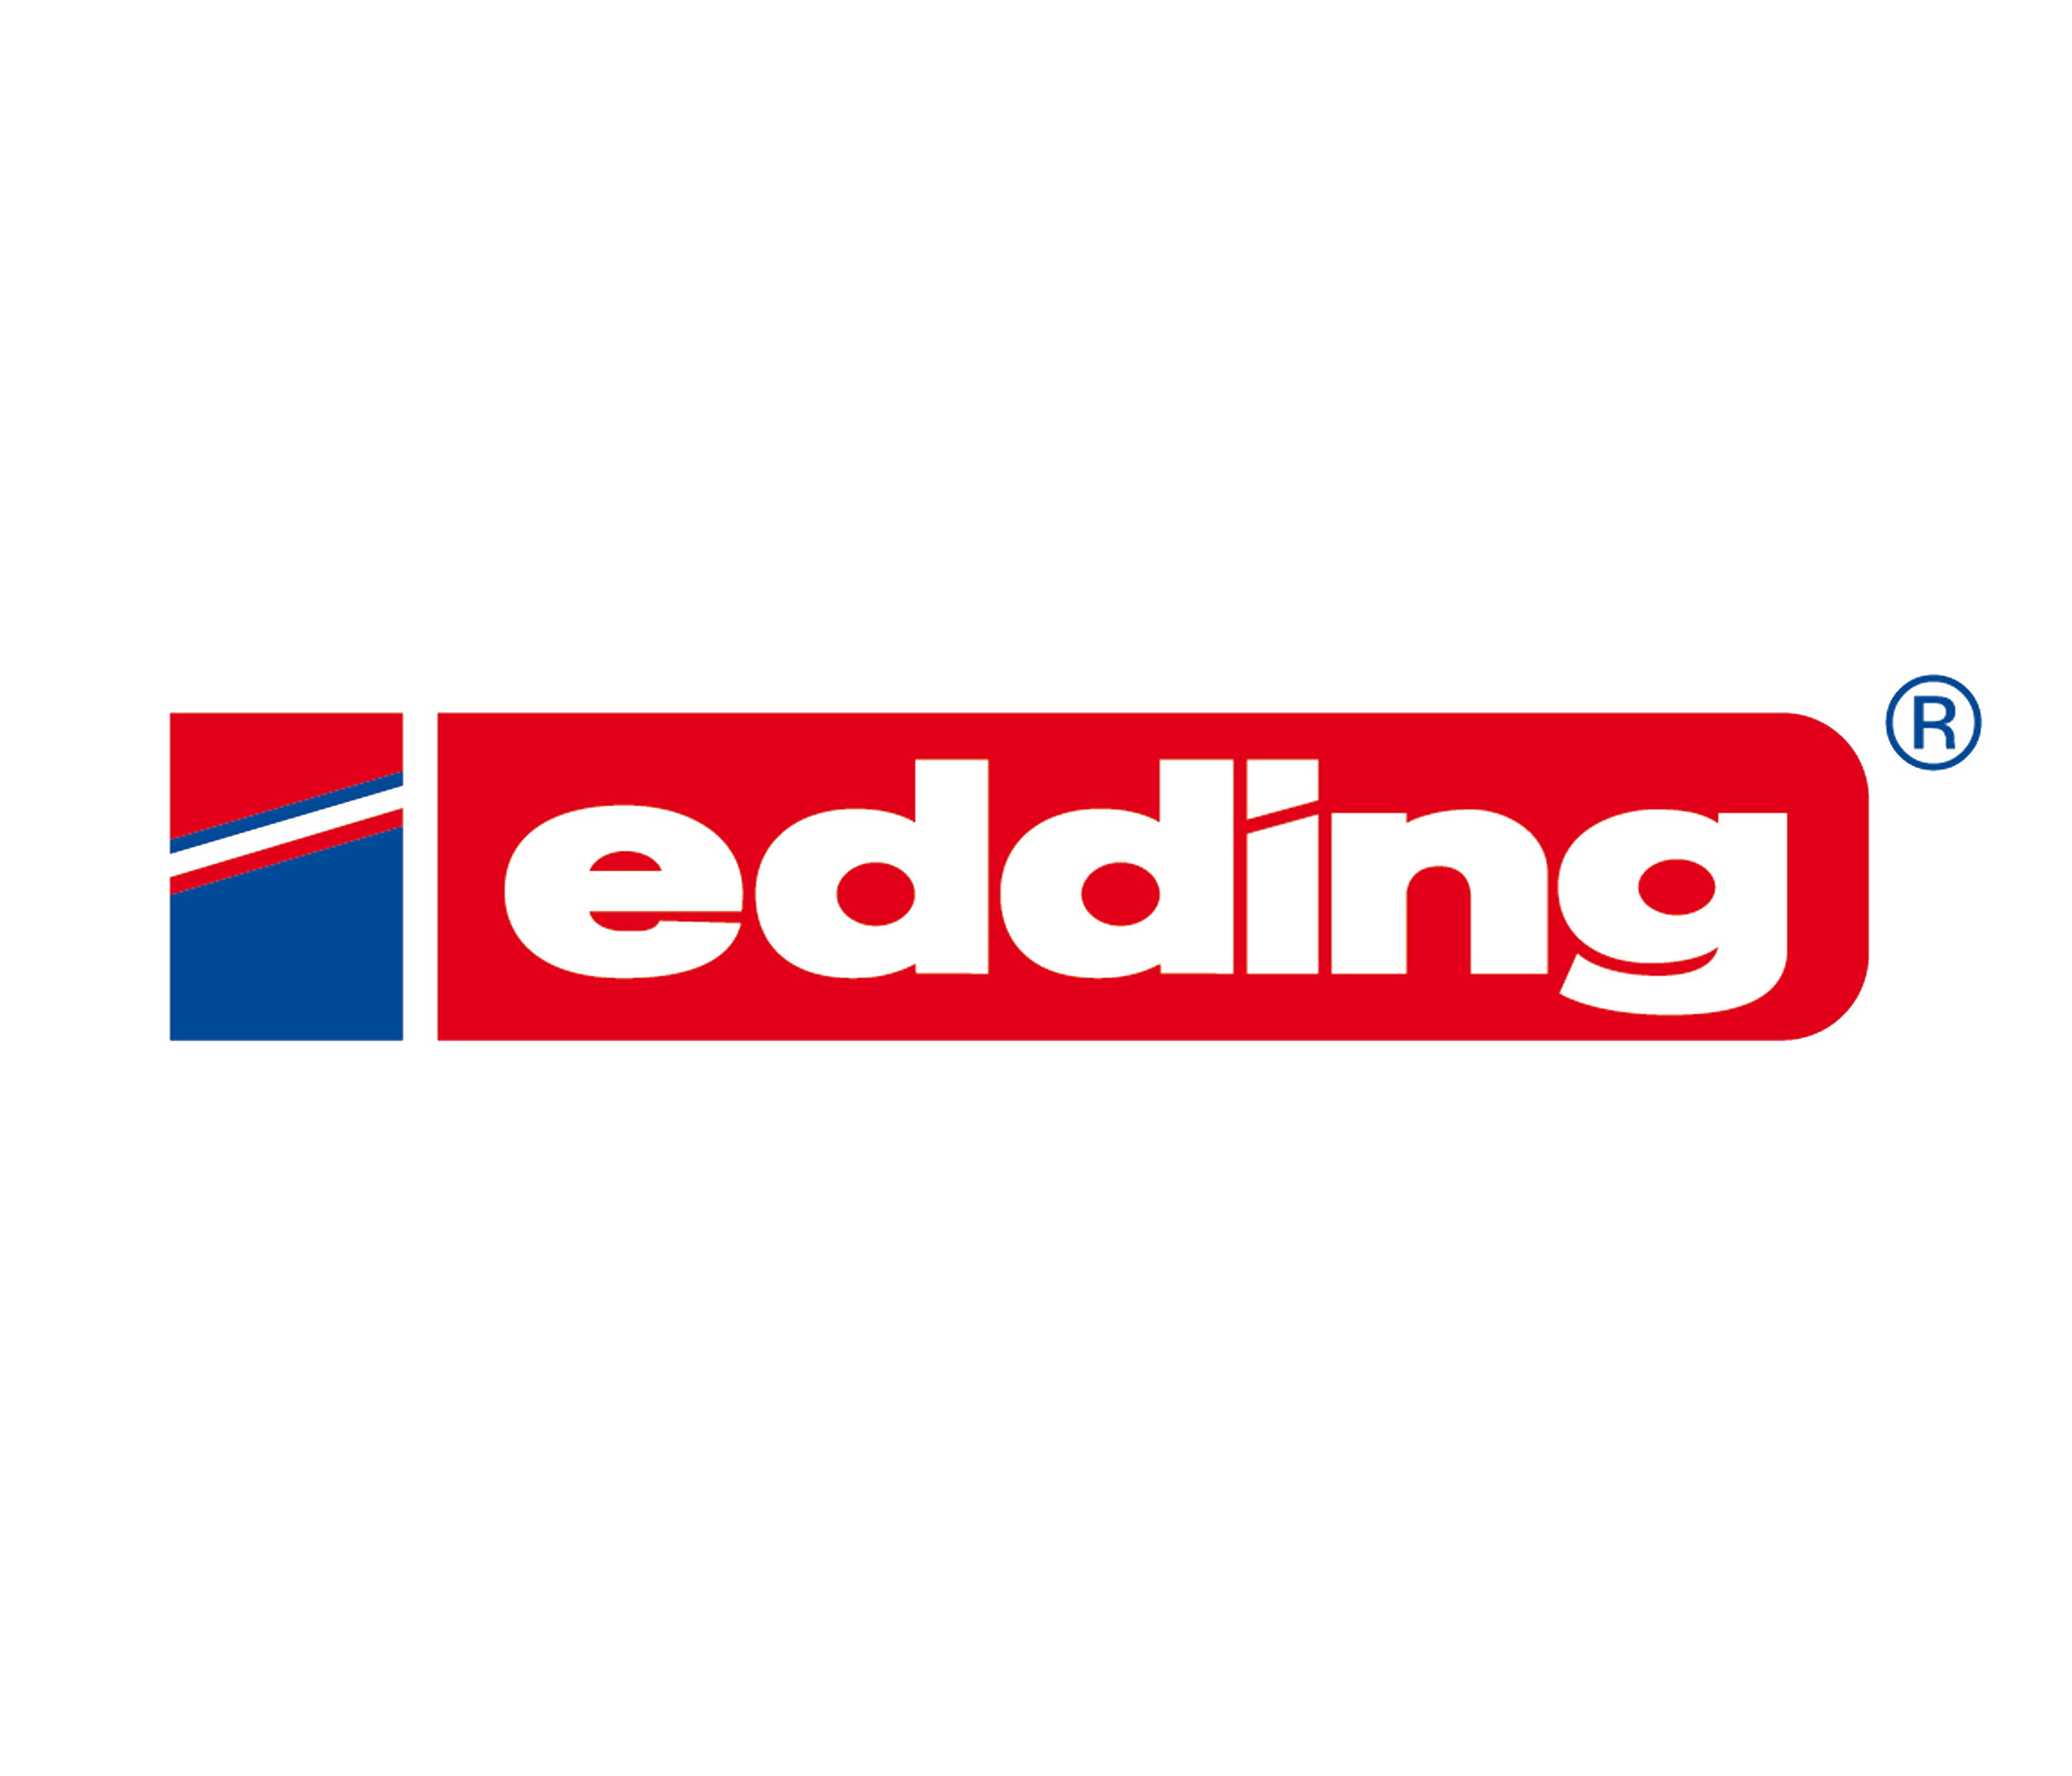 edding